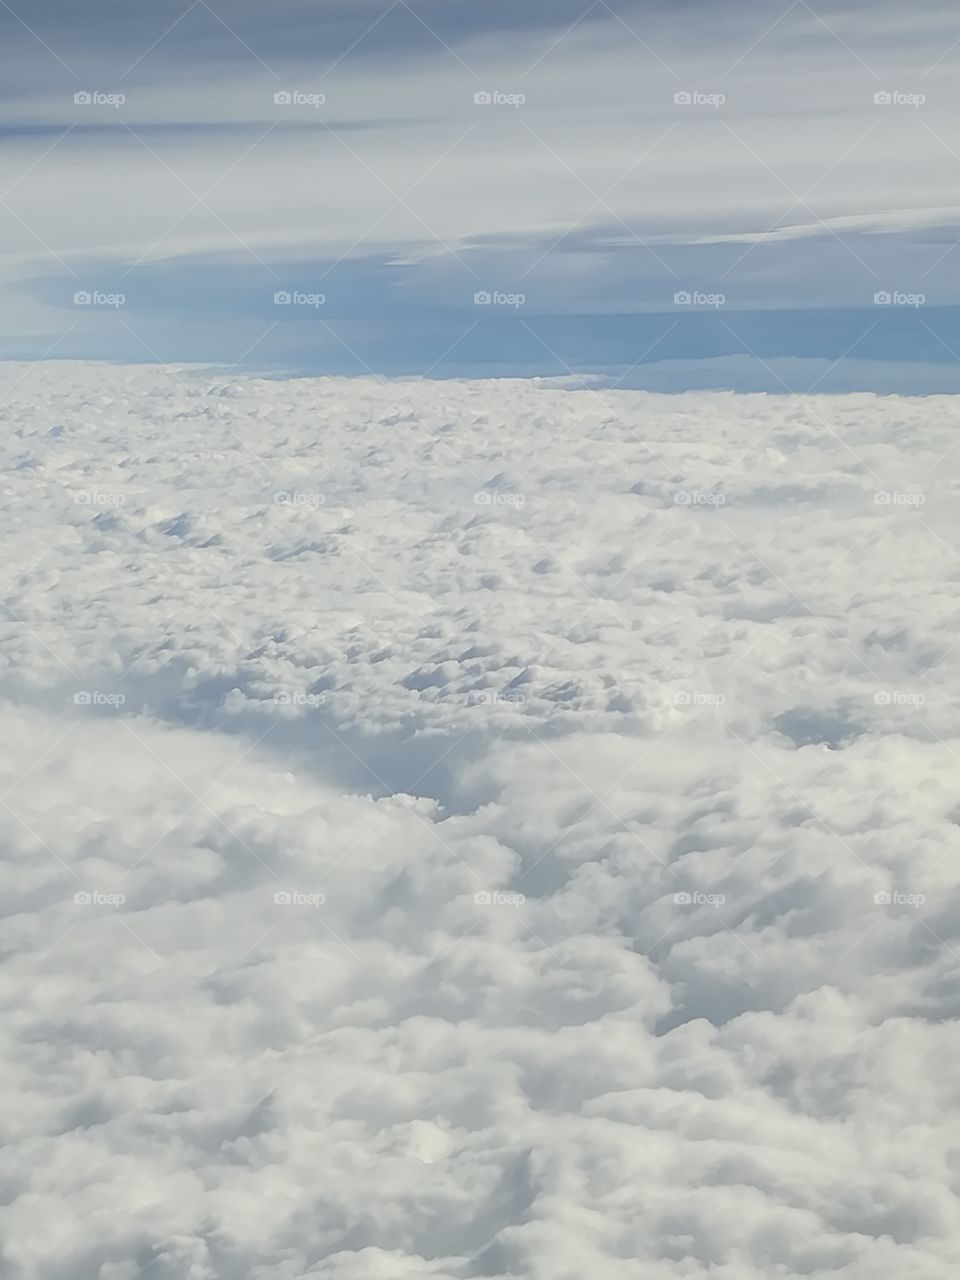 Cloud formations above the Atlantic ocean